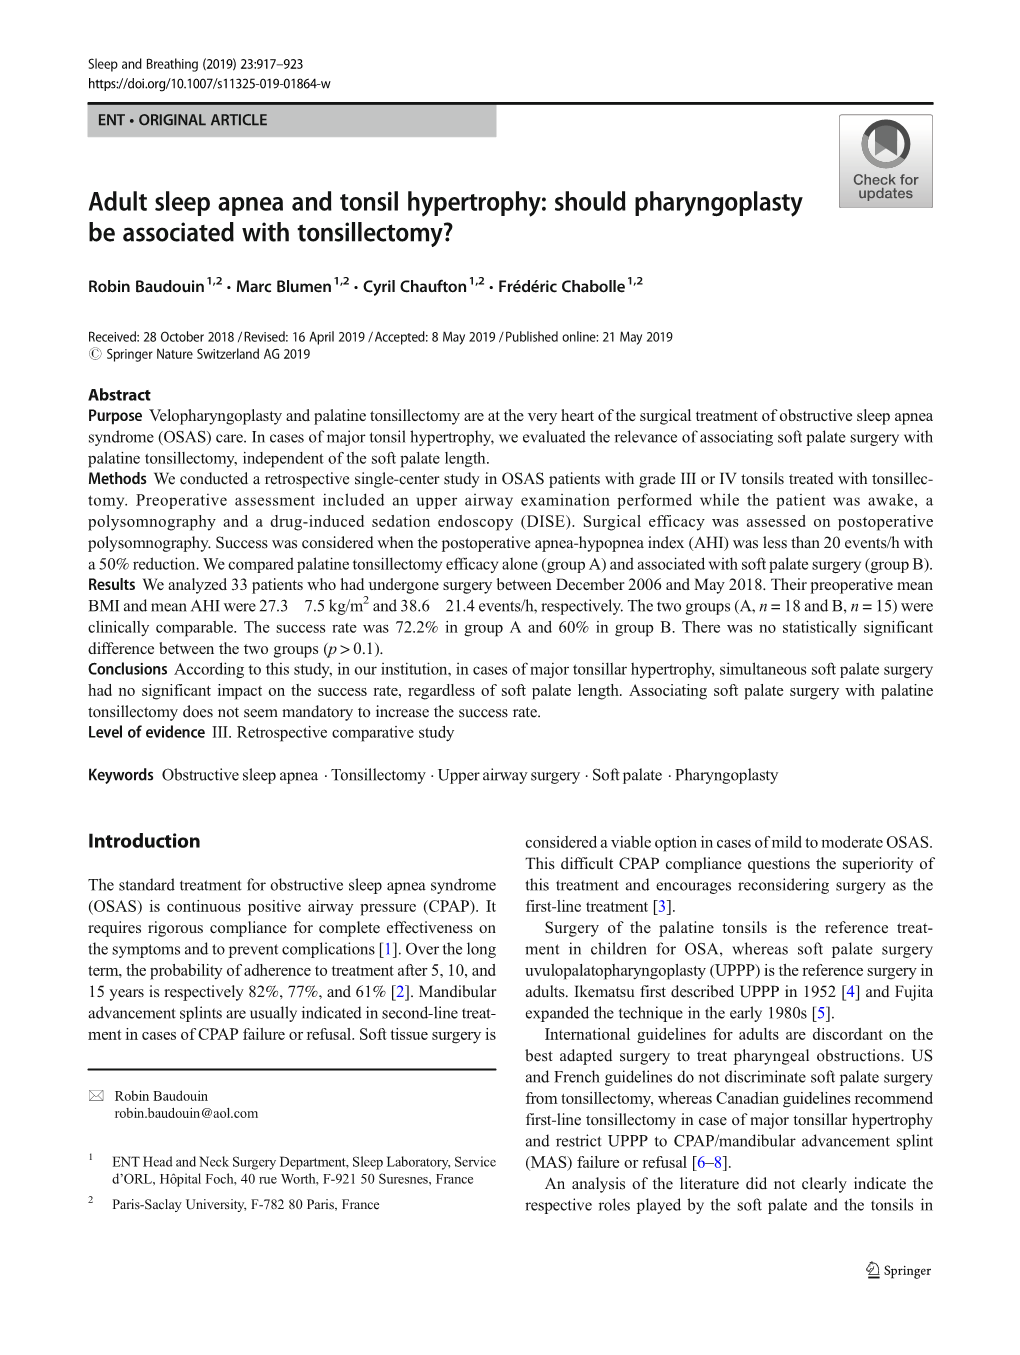 Adult Sleep Apnea and Tonsil Hypertrophy: Should Pharyngoplasty Be Associated with Tonsillectomy?